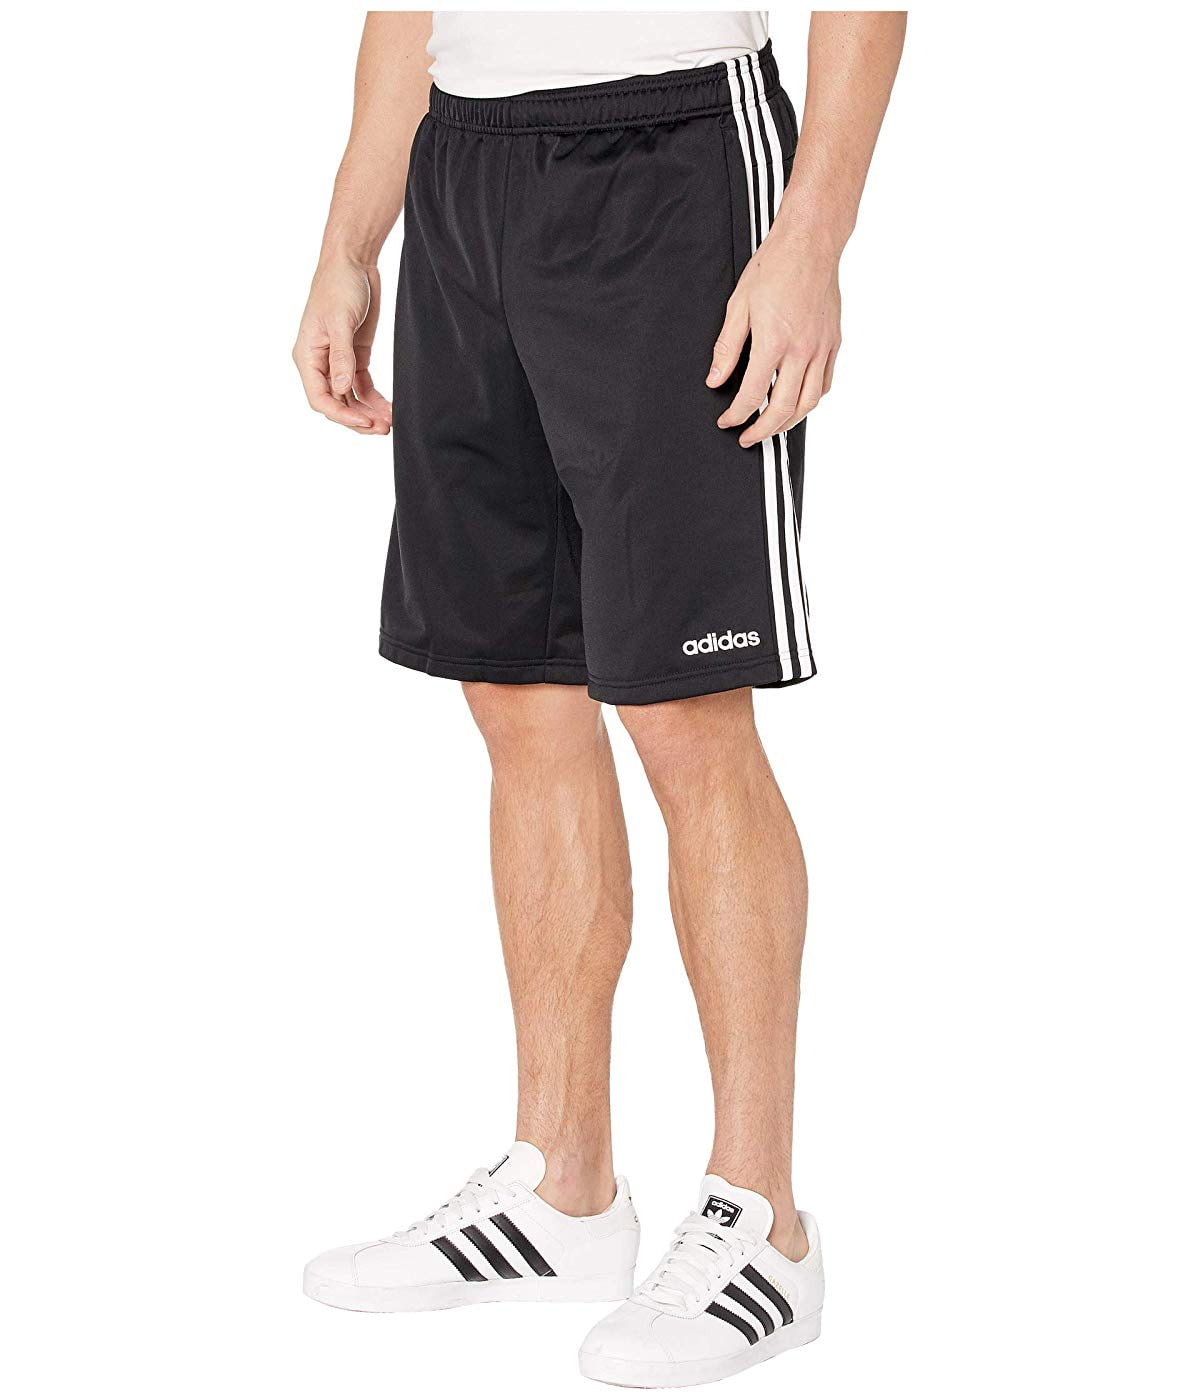 adidas Essentials Tricot 3-Stripes Shorts Black/White